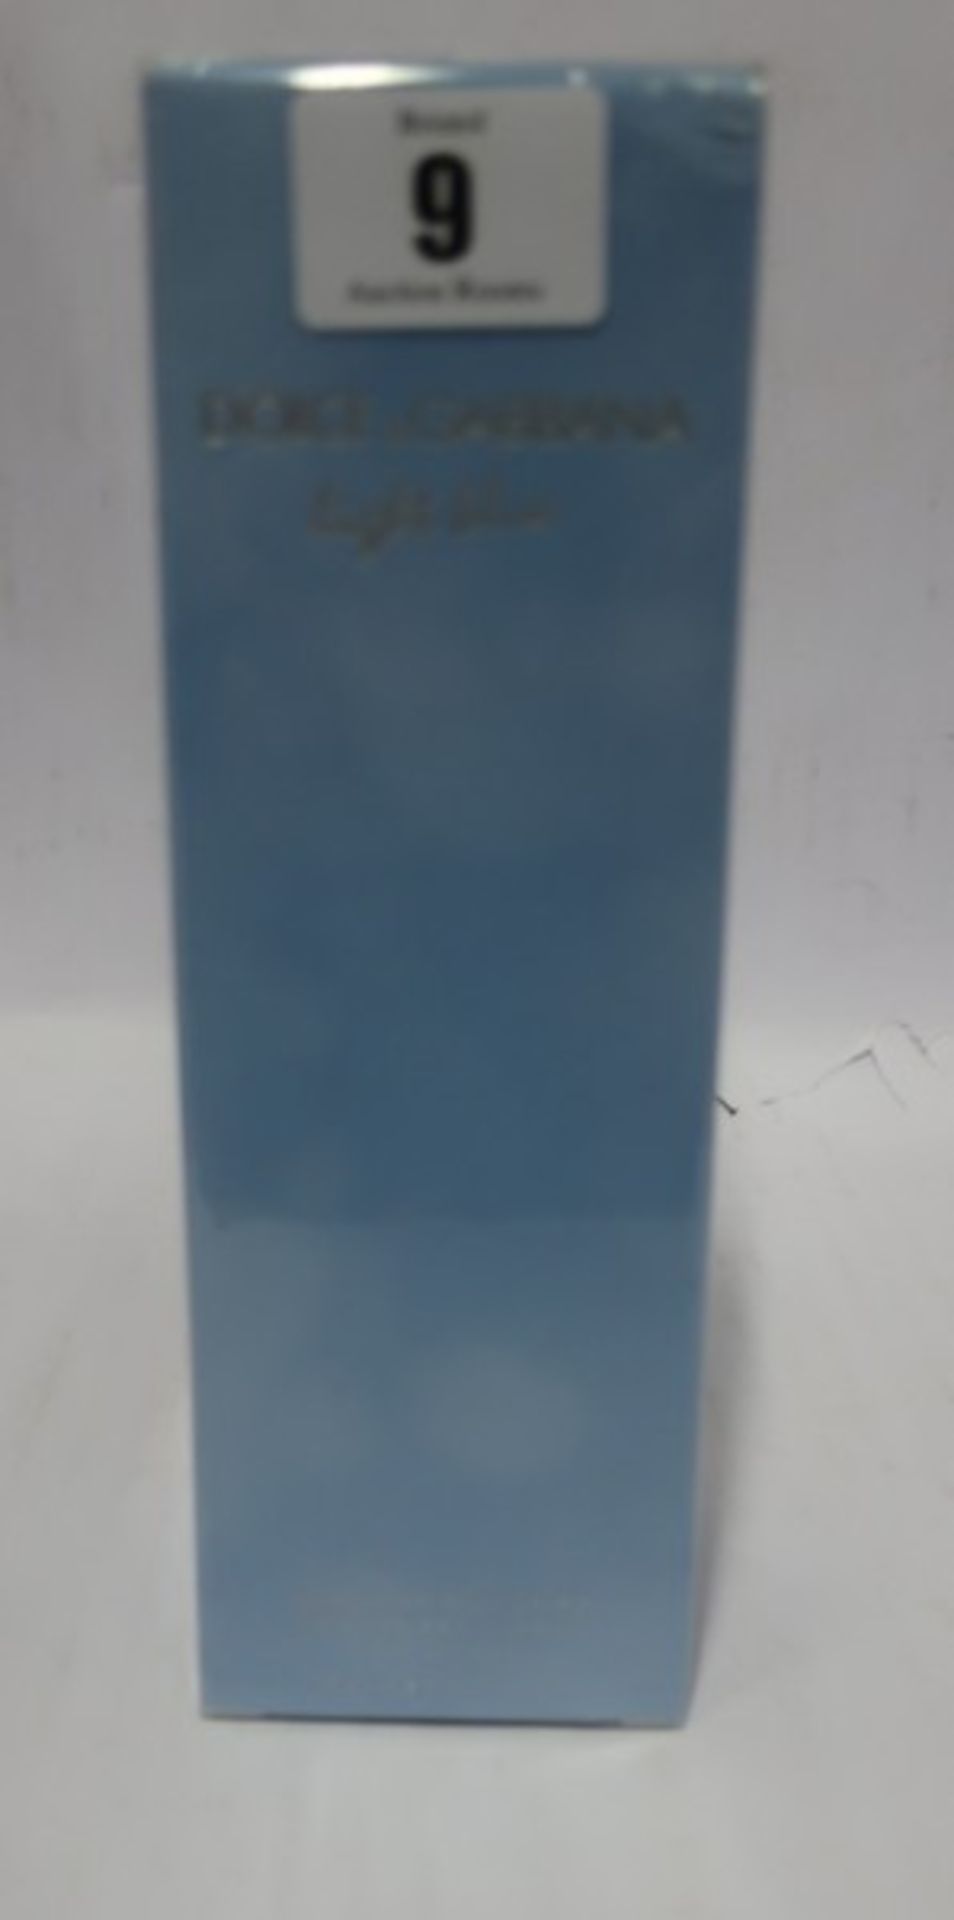 Six Dolce & Gabbana Light Blue refreshing body creams (6 x 200ml).